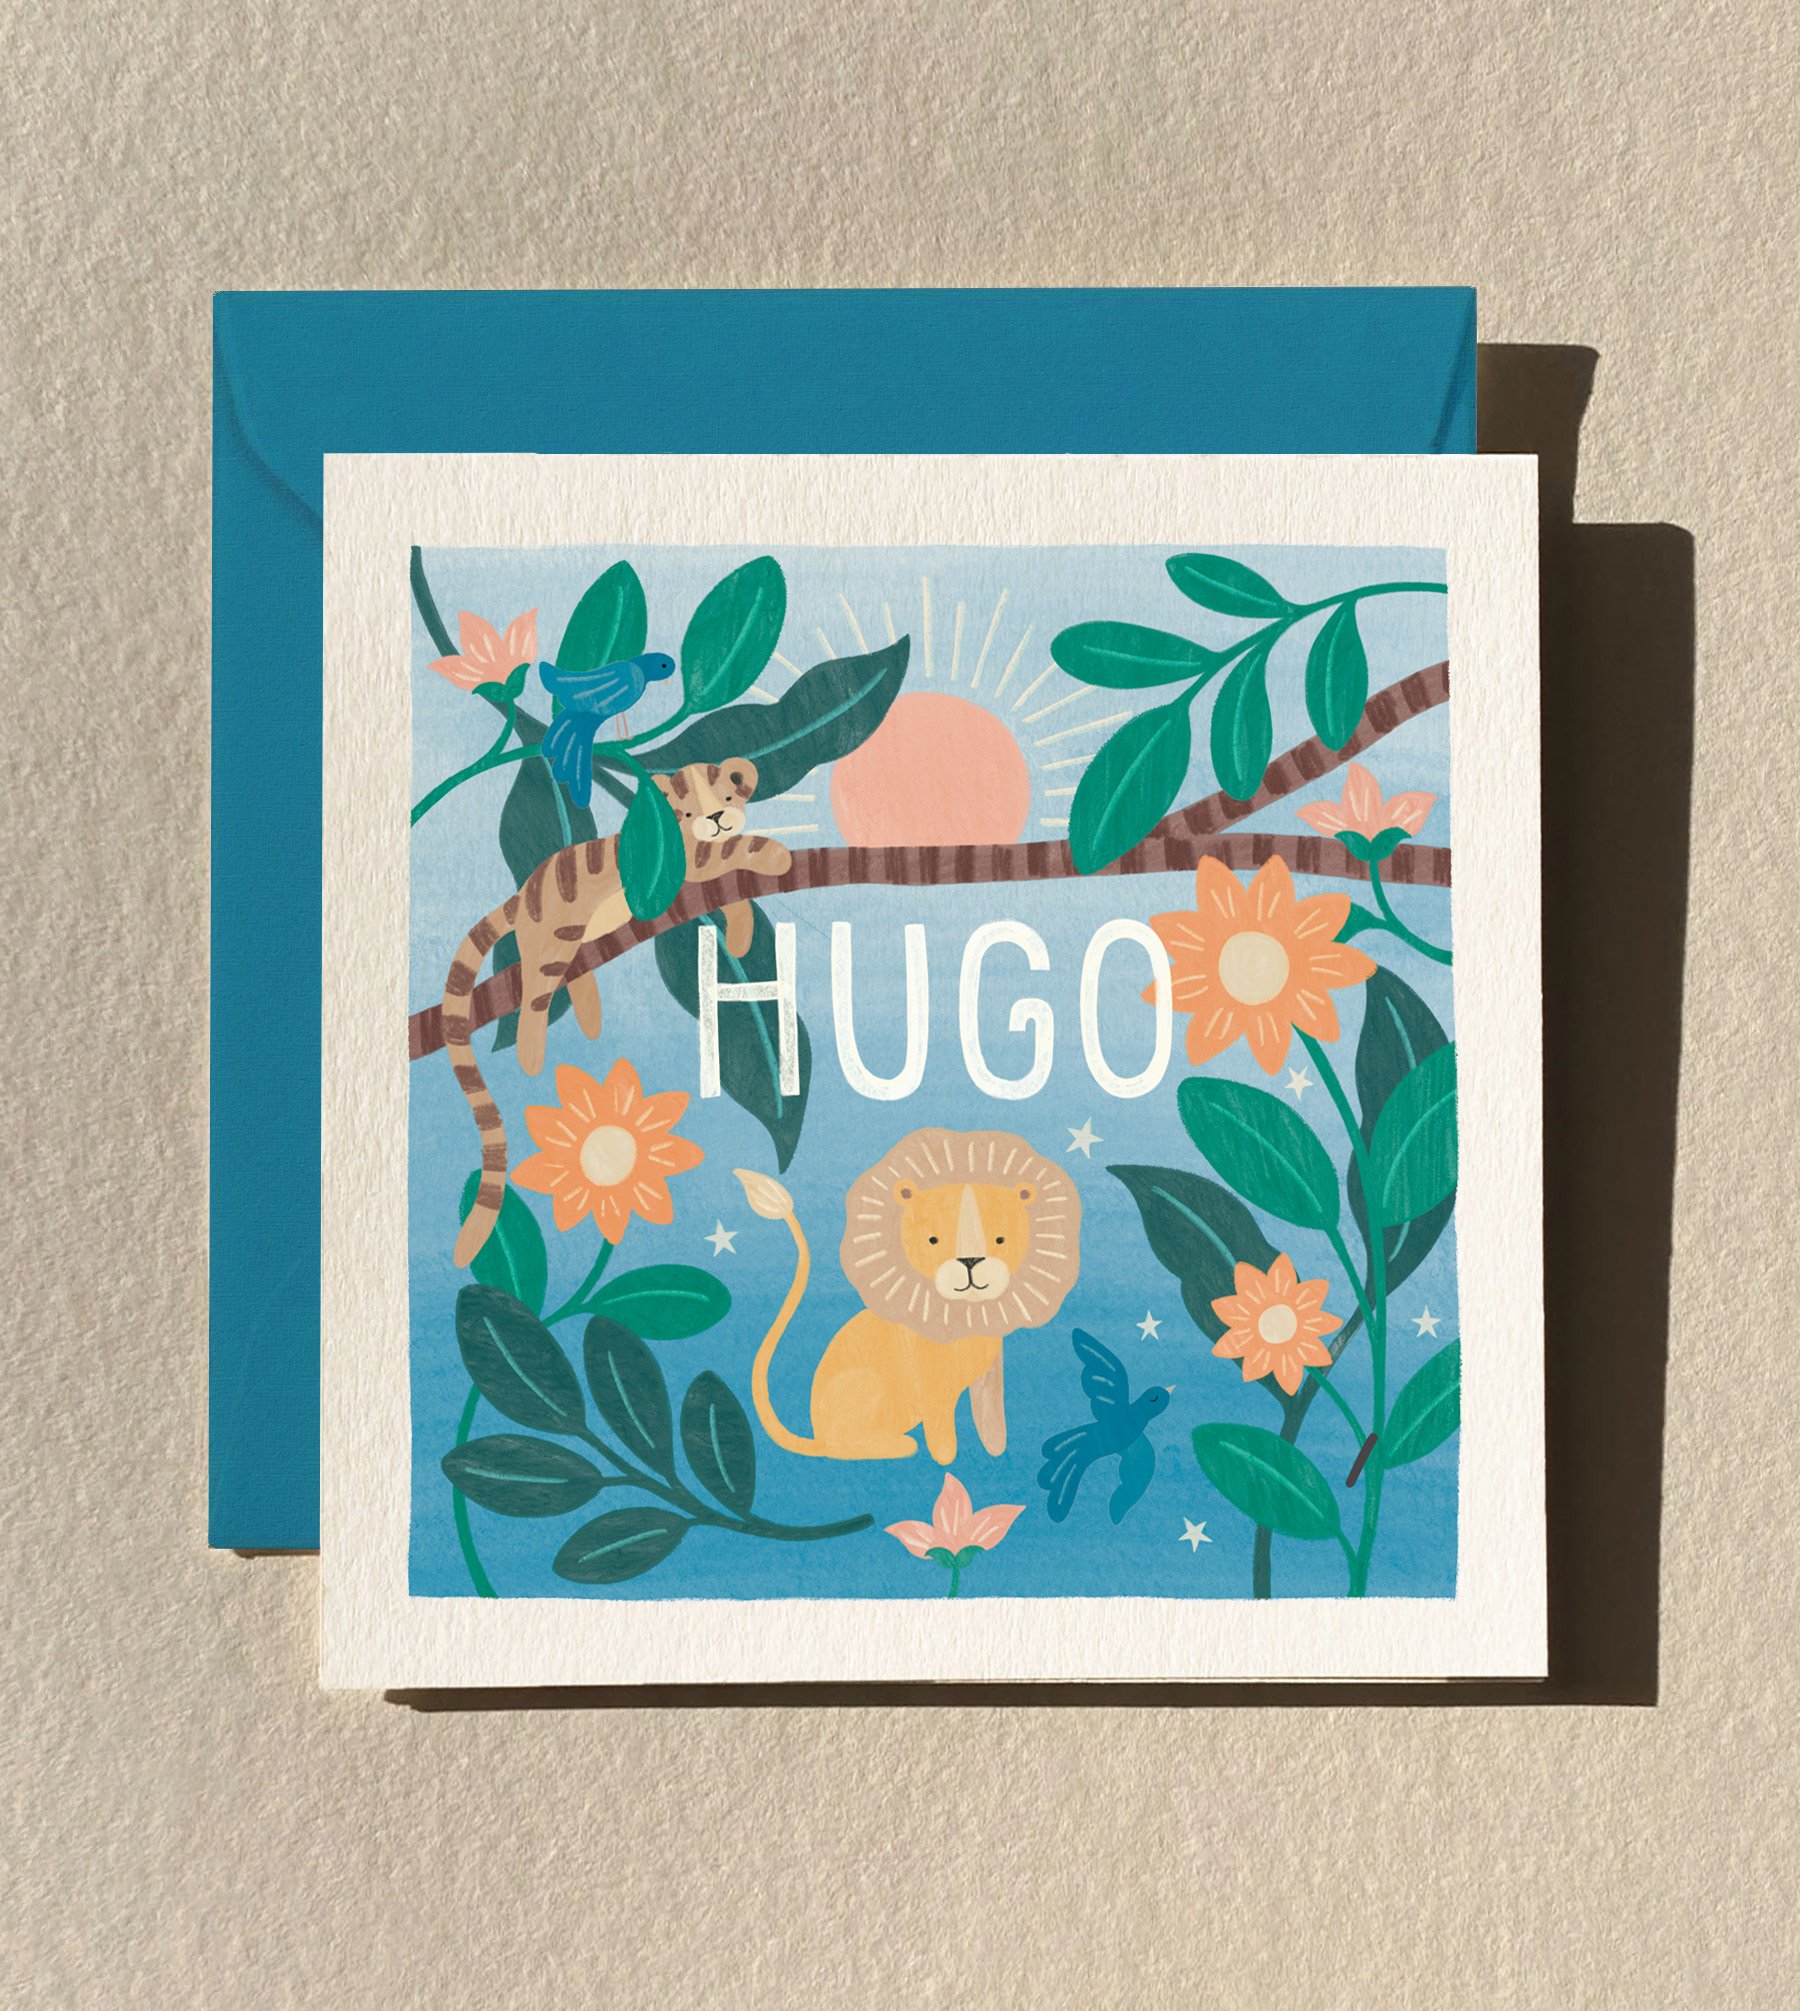 Hugo1.jpg